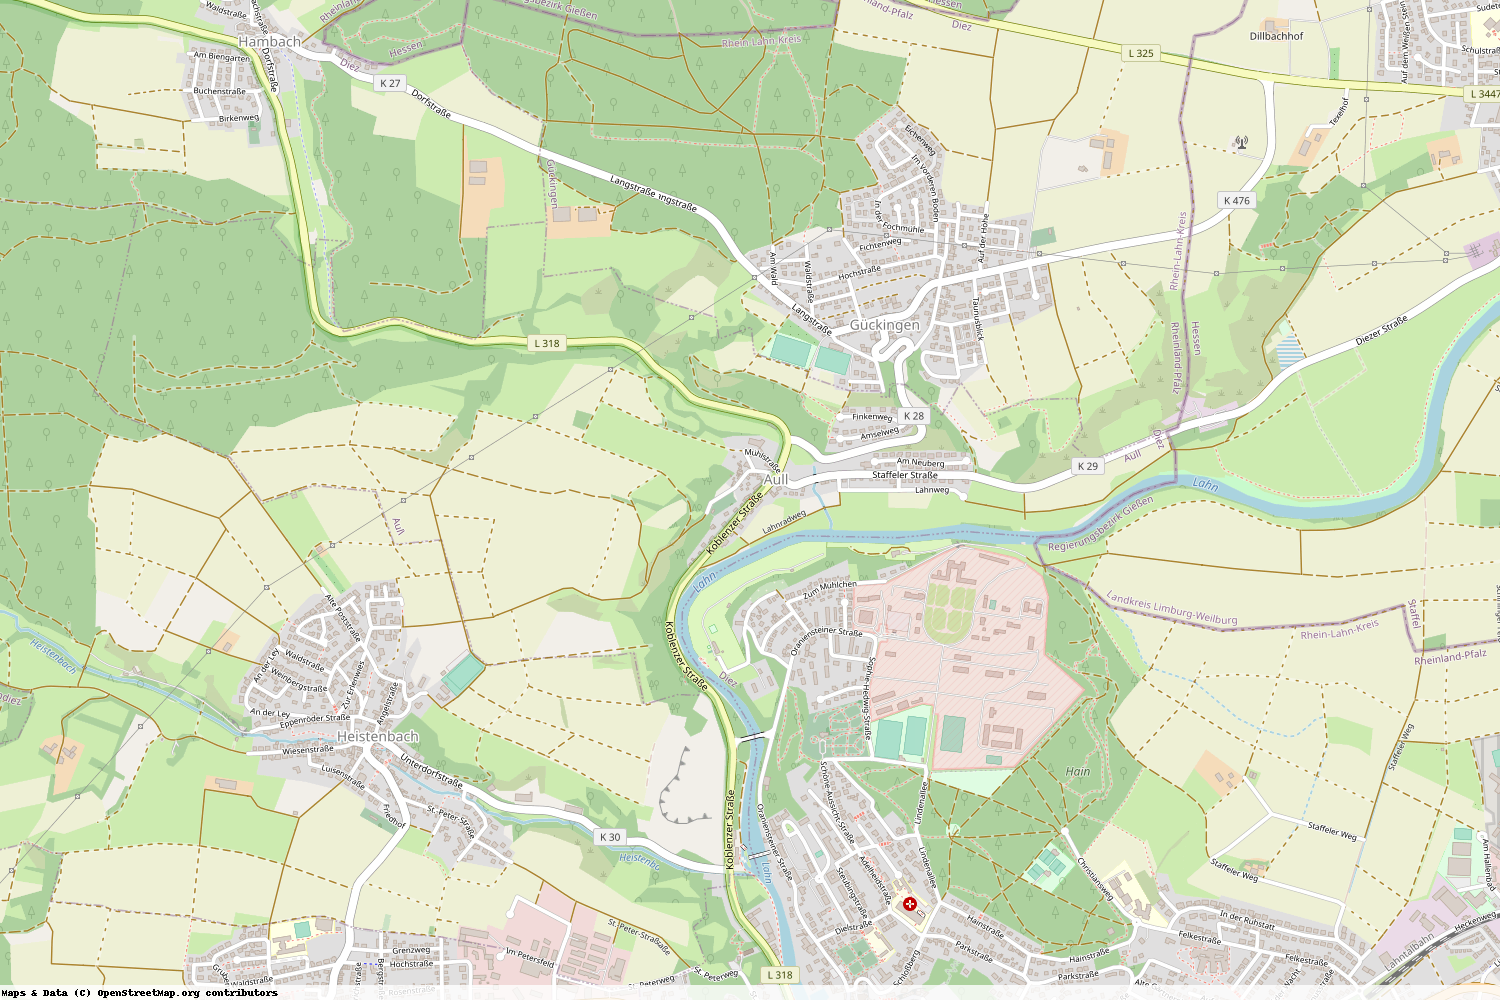 Ist gerade Stromausfall in Rheinland-Pfalz - Rhein-Lahn-Kreis - Aull?